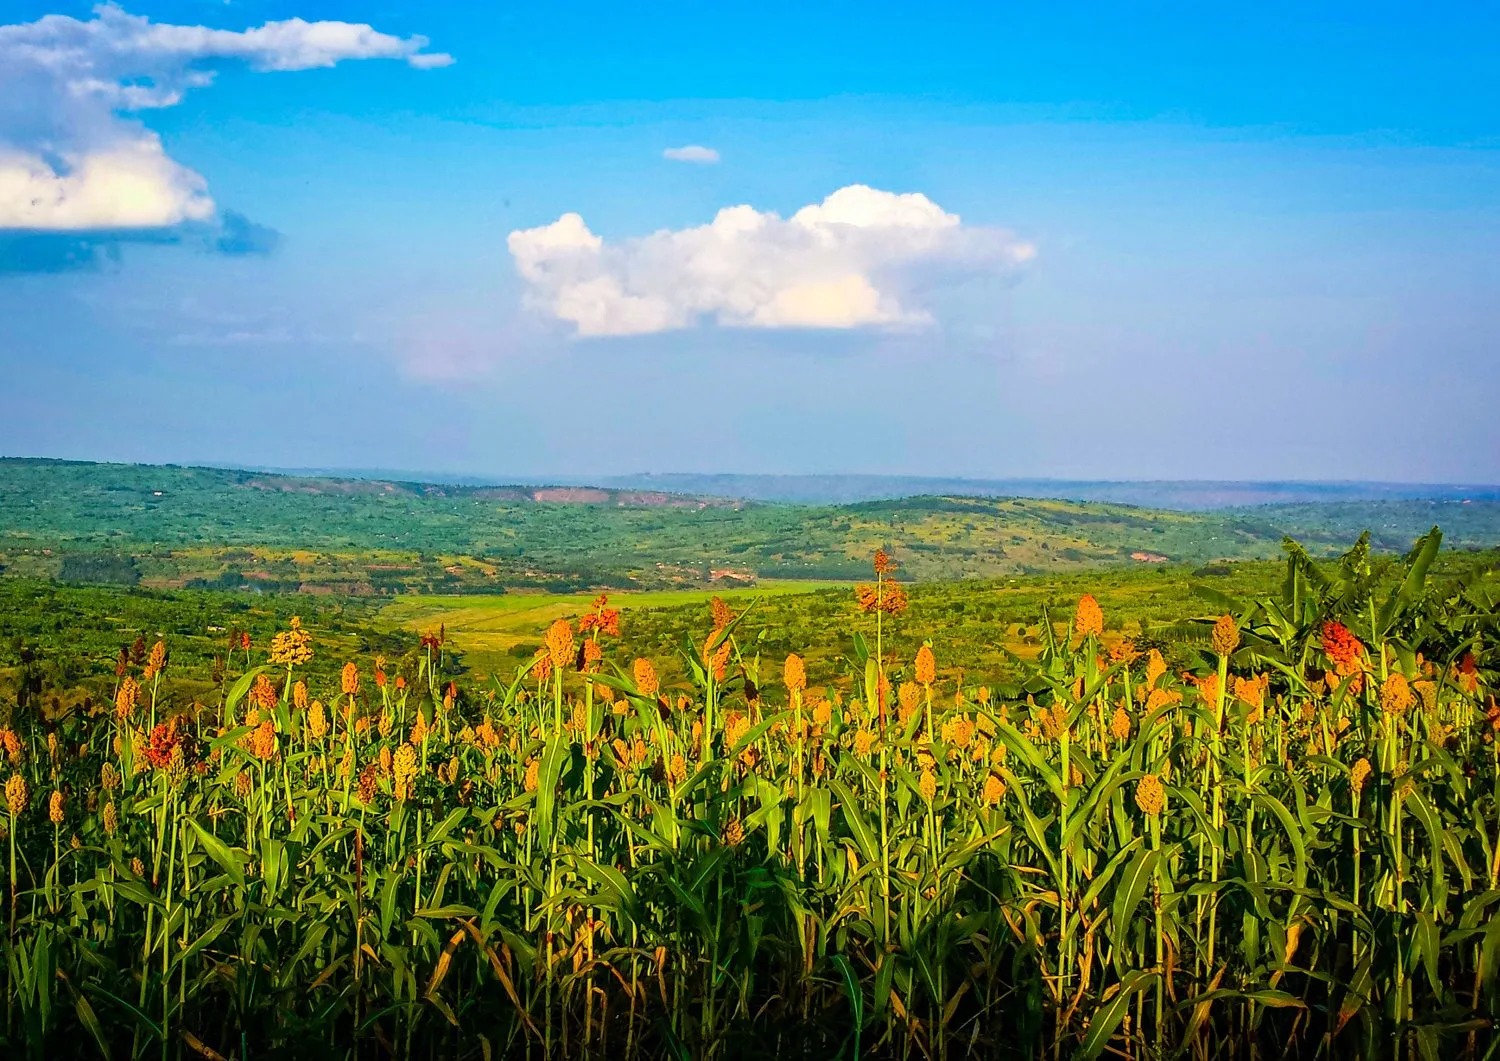 Beautiful fields in Rwanda. Where will YOUR travels take you?